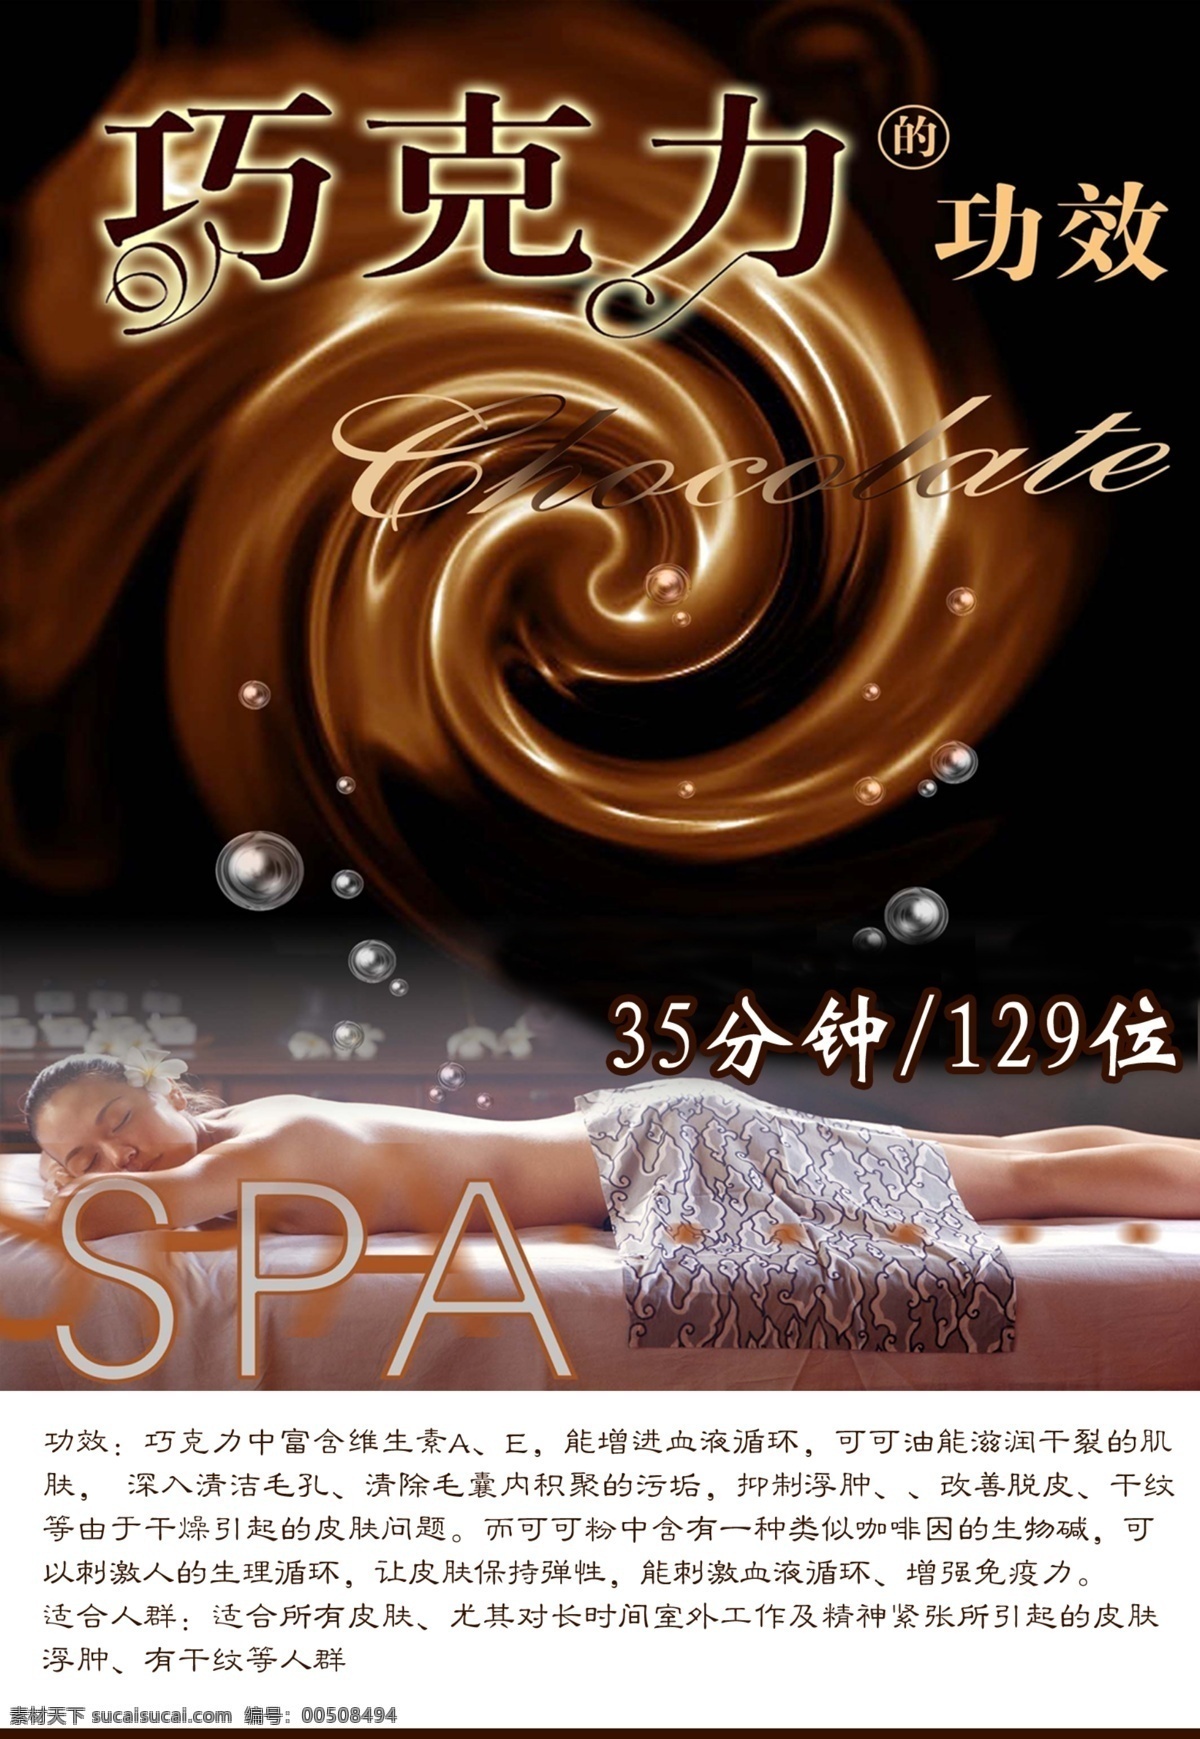 spa 模板下载 广告设计模板 护肤 巧克力 源文件 巧克力功效 巧克力浴 木桶浴 psd源文件